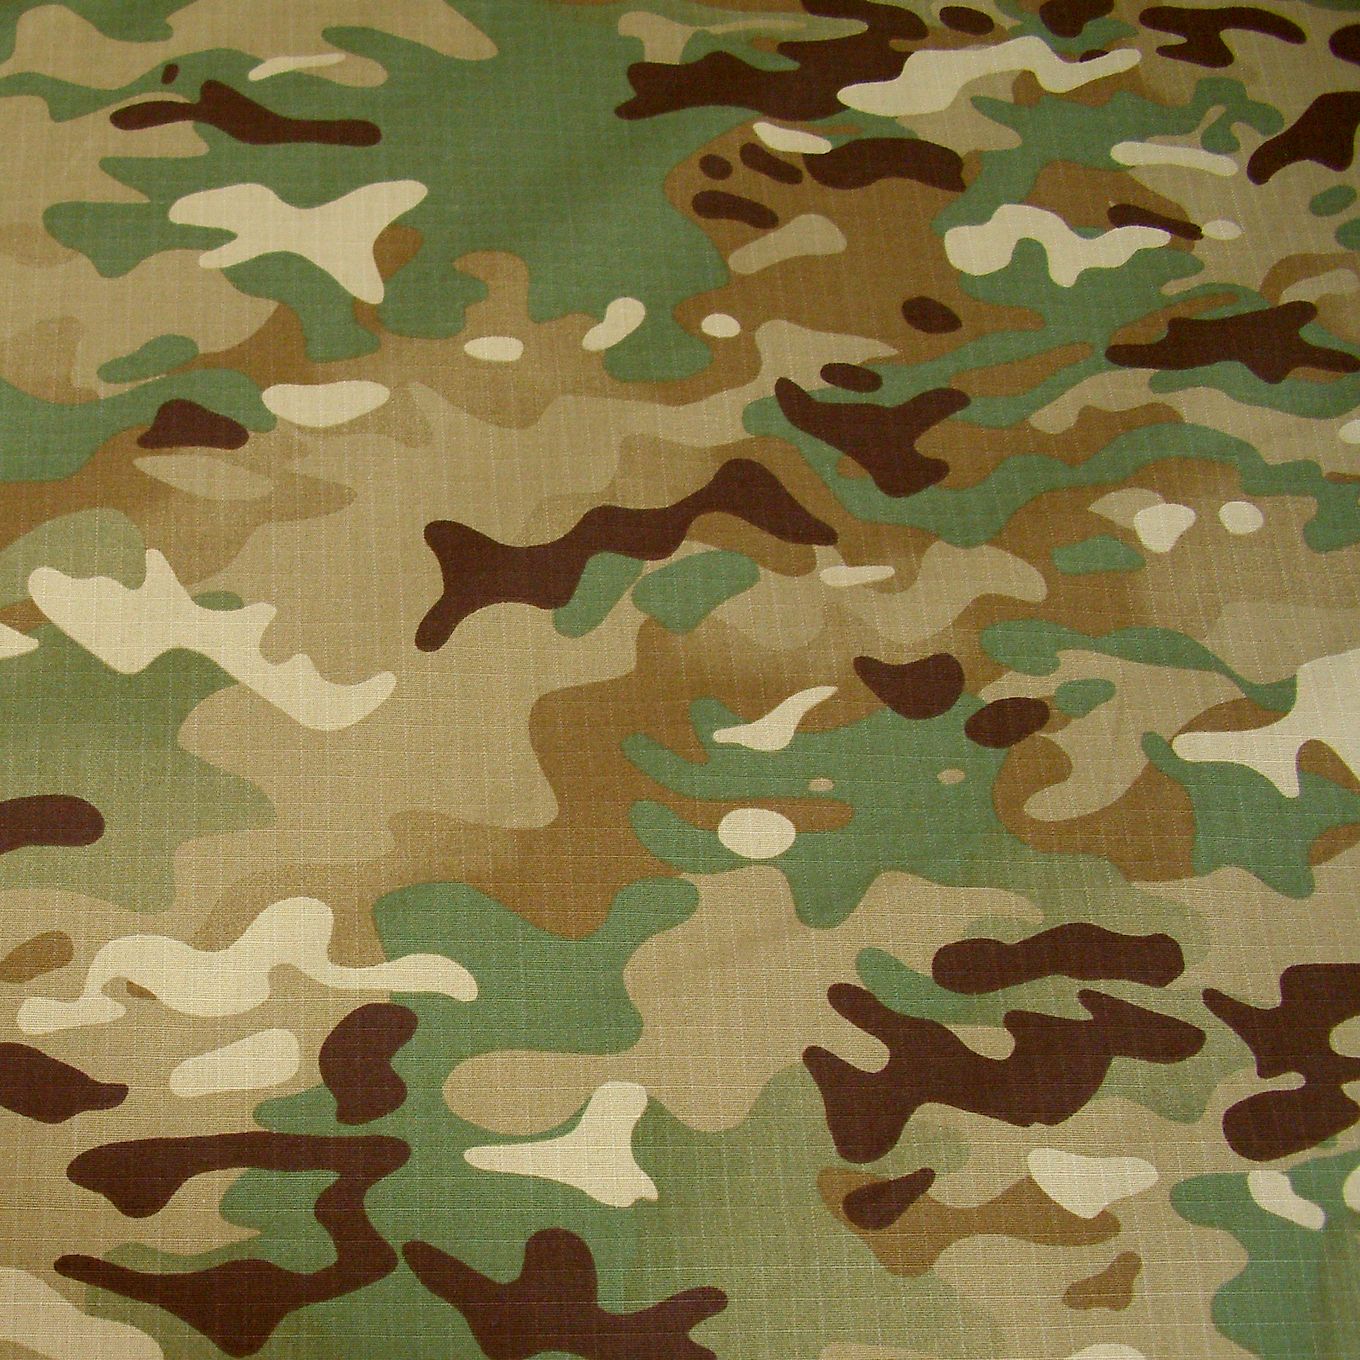 Großbritannie Camouflage Stoff Ripstop Armee Flecktarn Jacke Hose Baumwollstoff